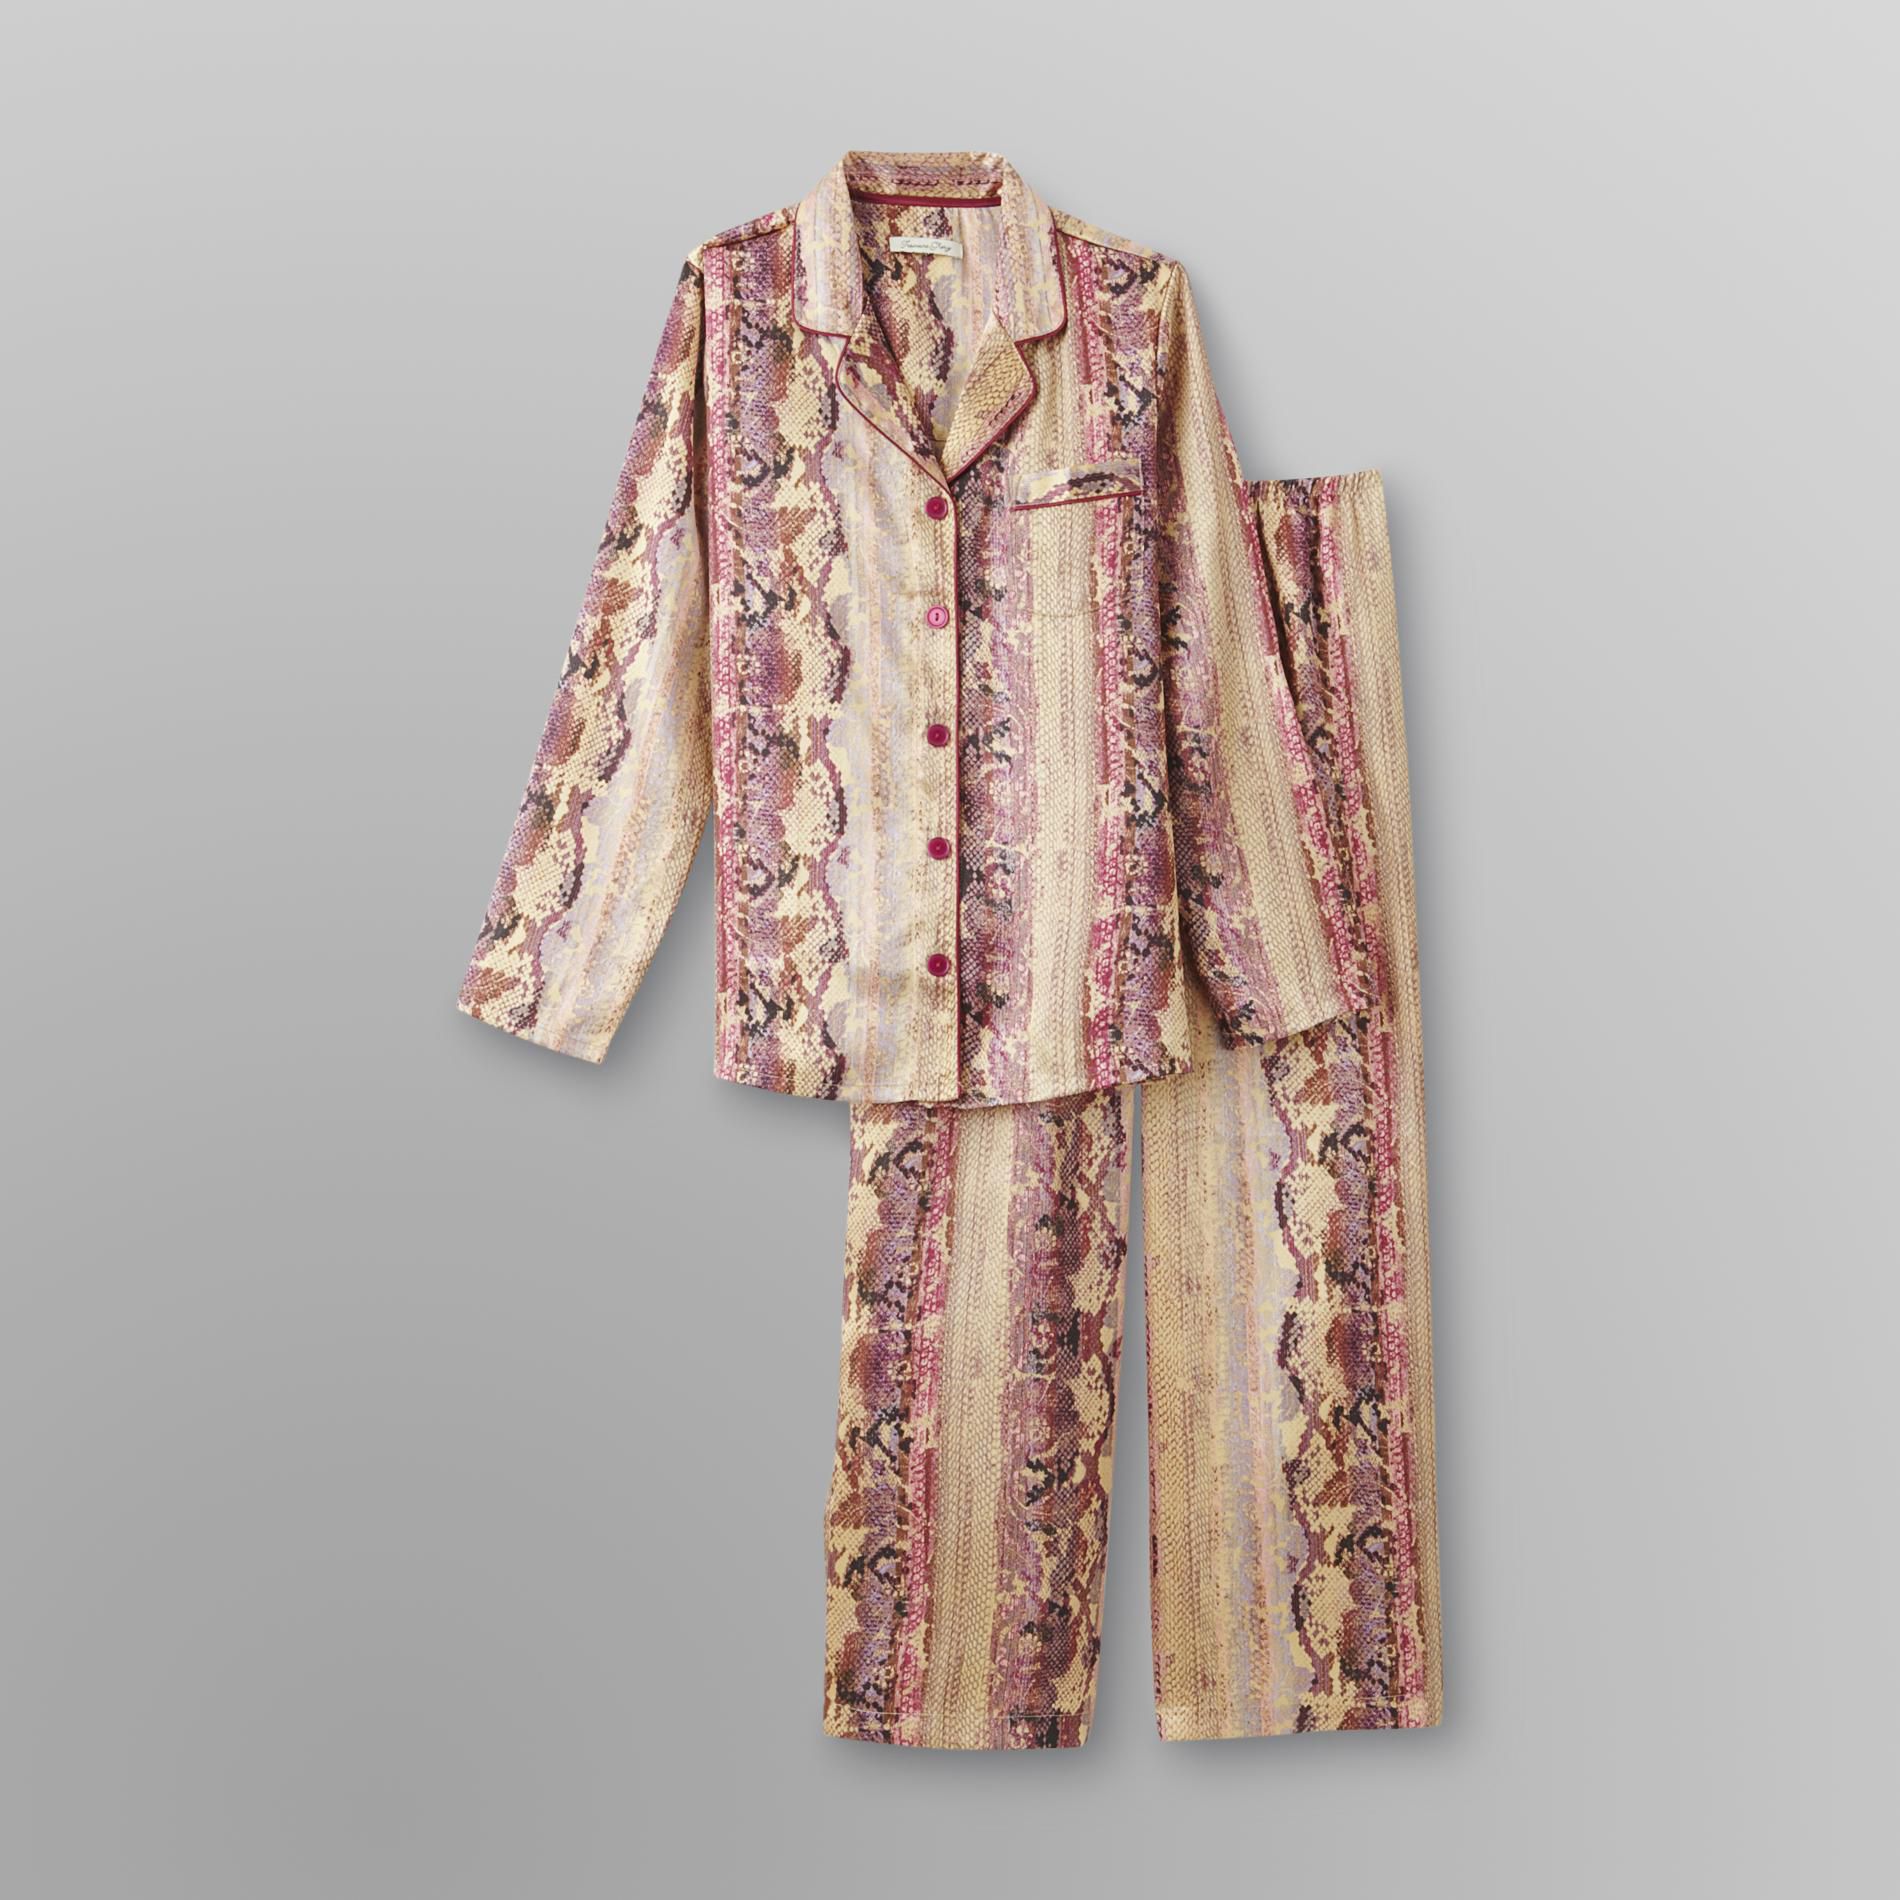 Jaclyn Smith Women's Pajamas - Snakeskin Print